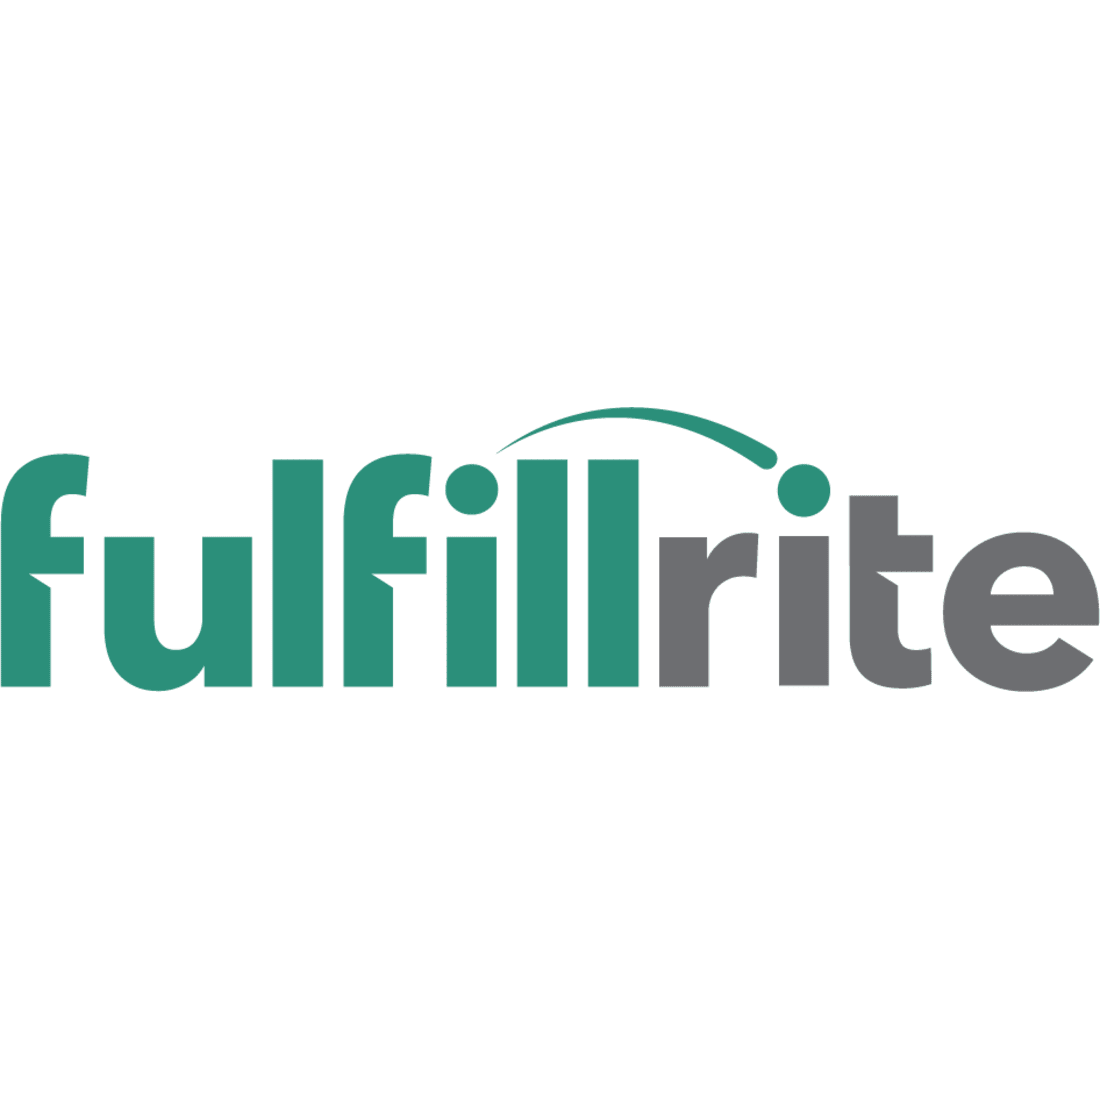 Fulfillrite-newlogo (1)